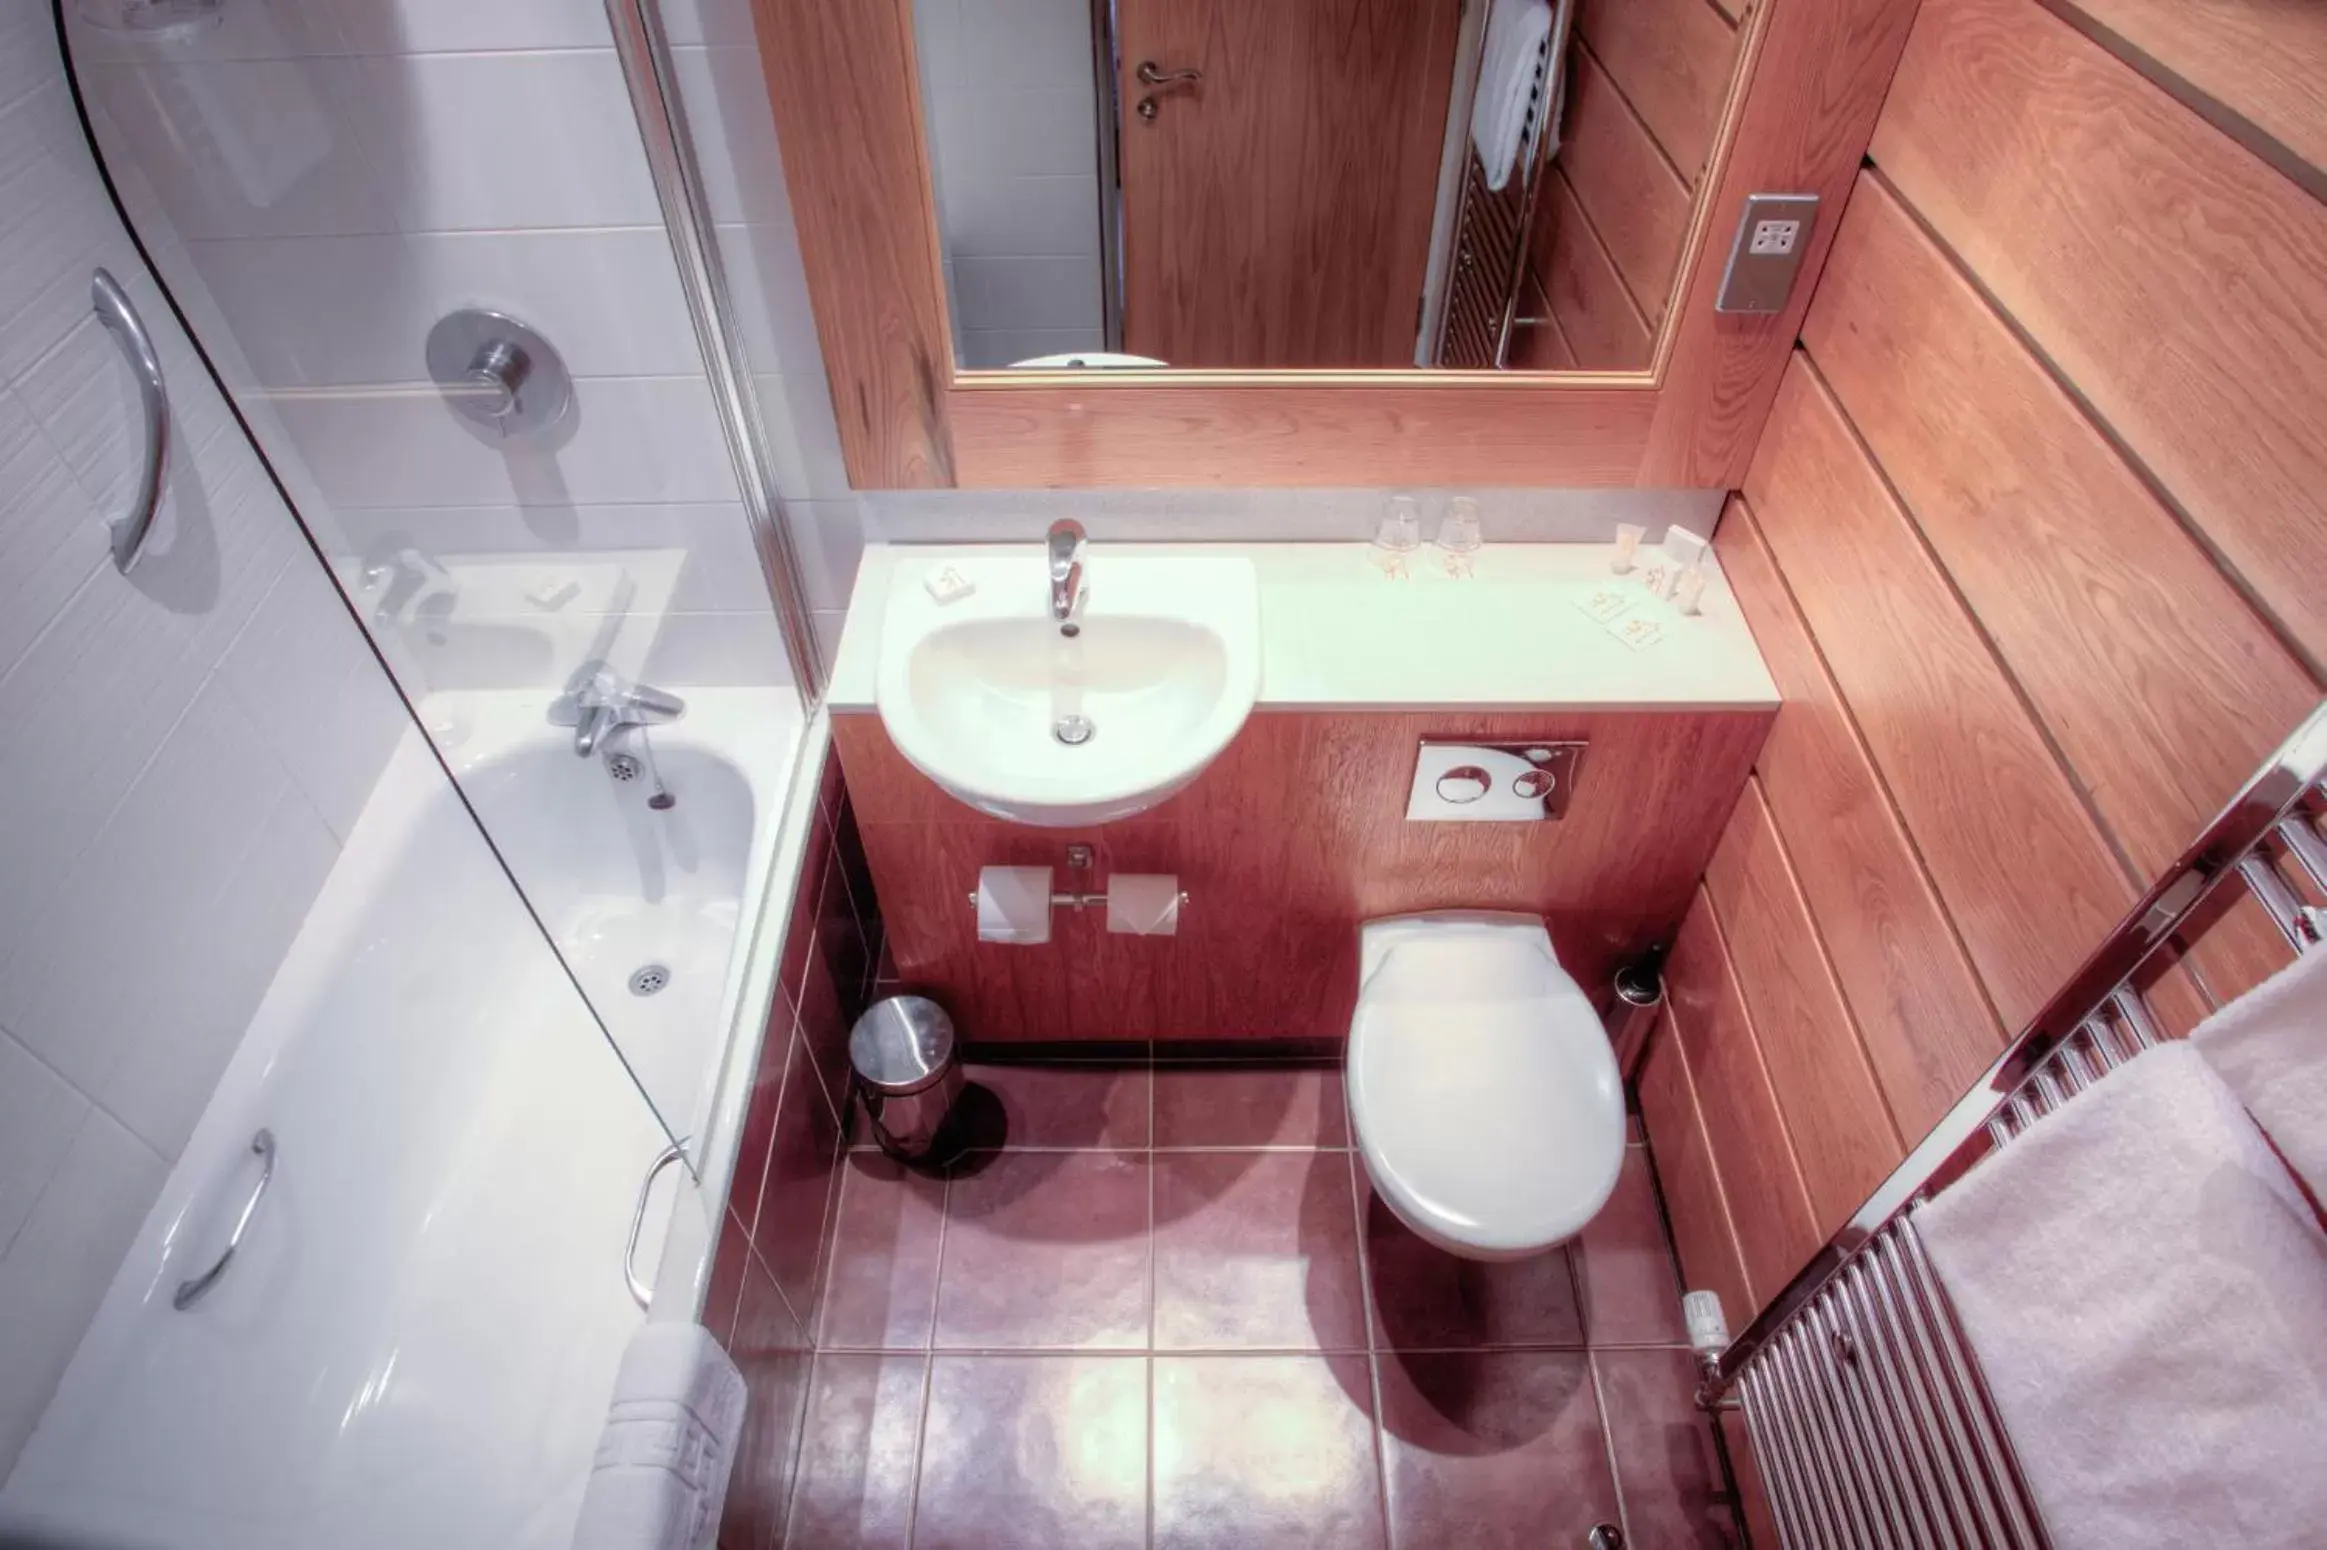 Bathroom in Strangford Arms Hotel